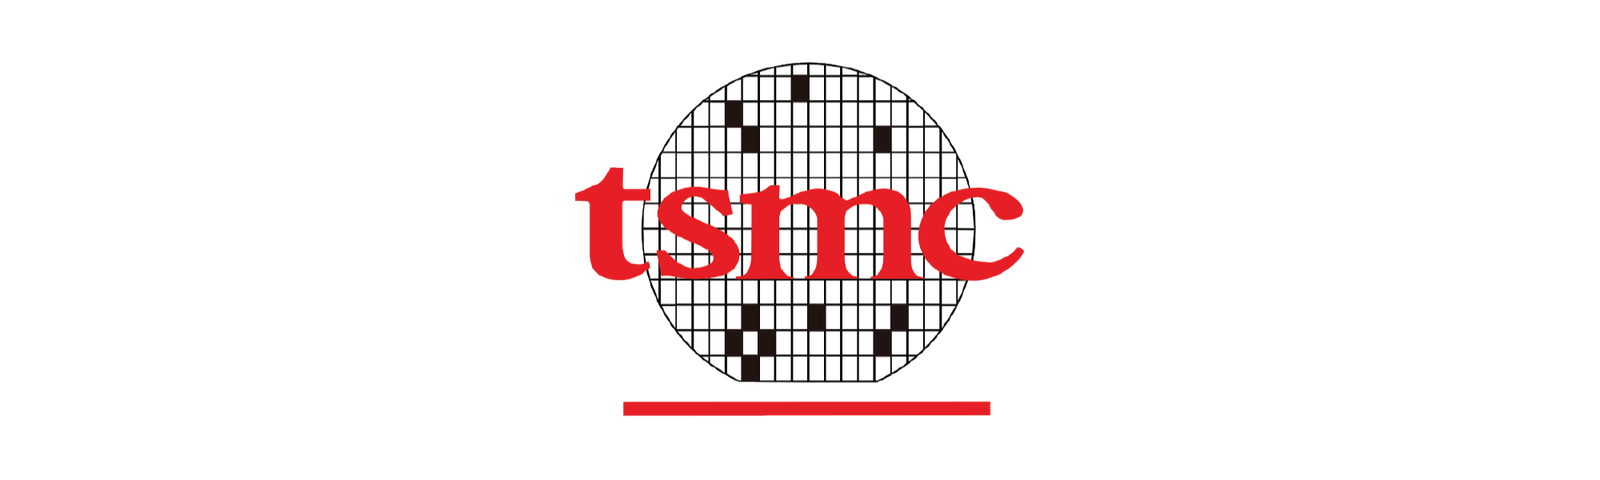 TSMC.png